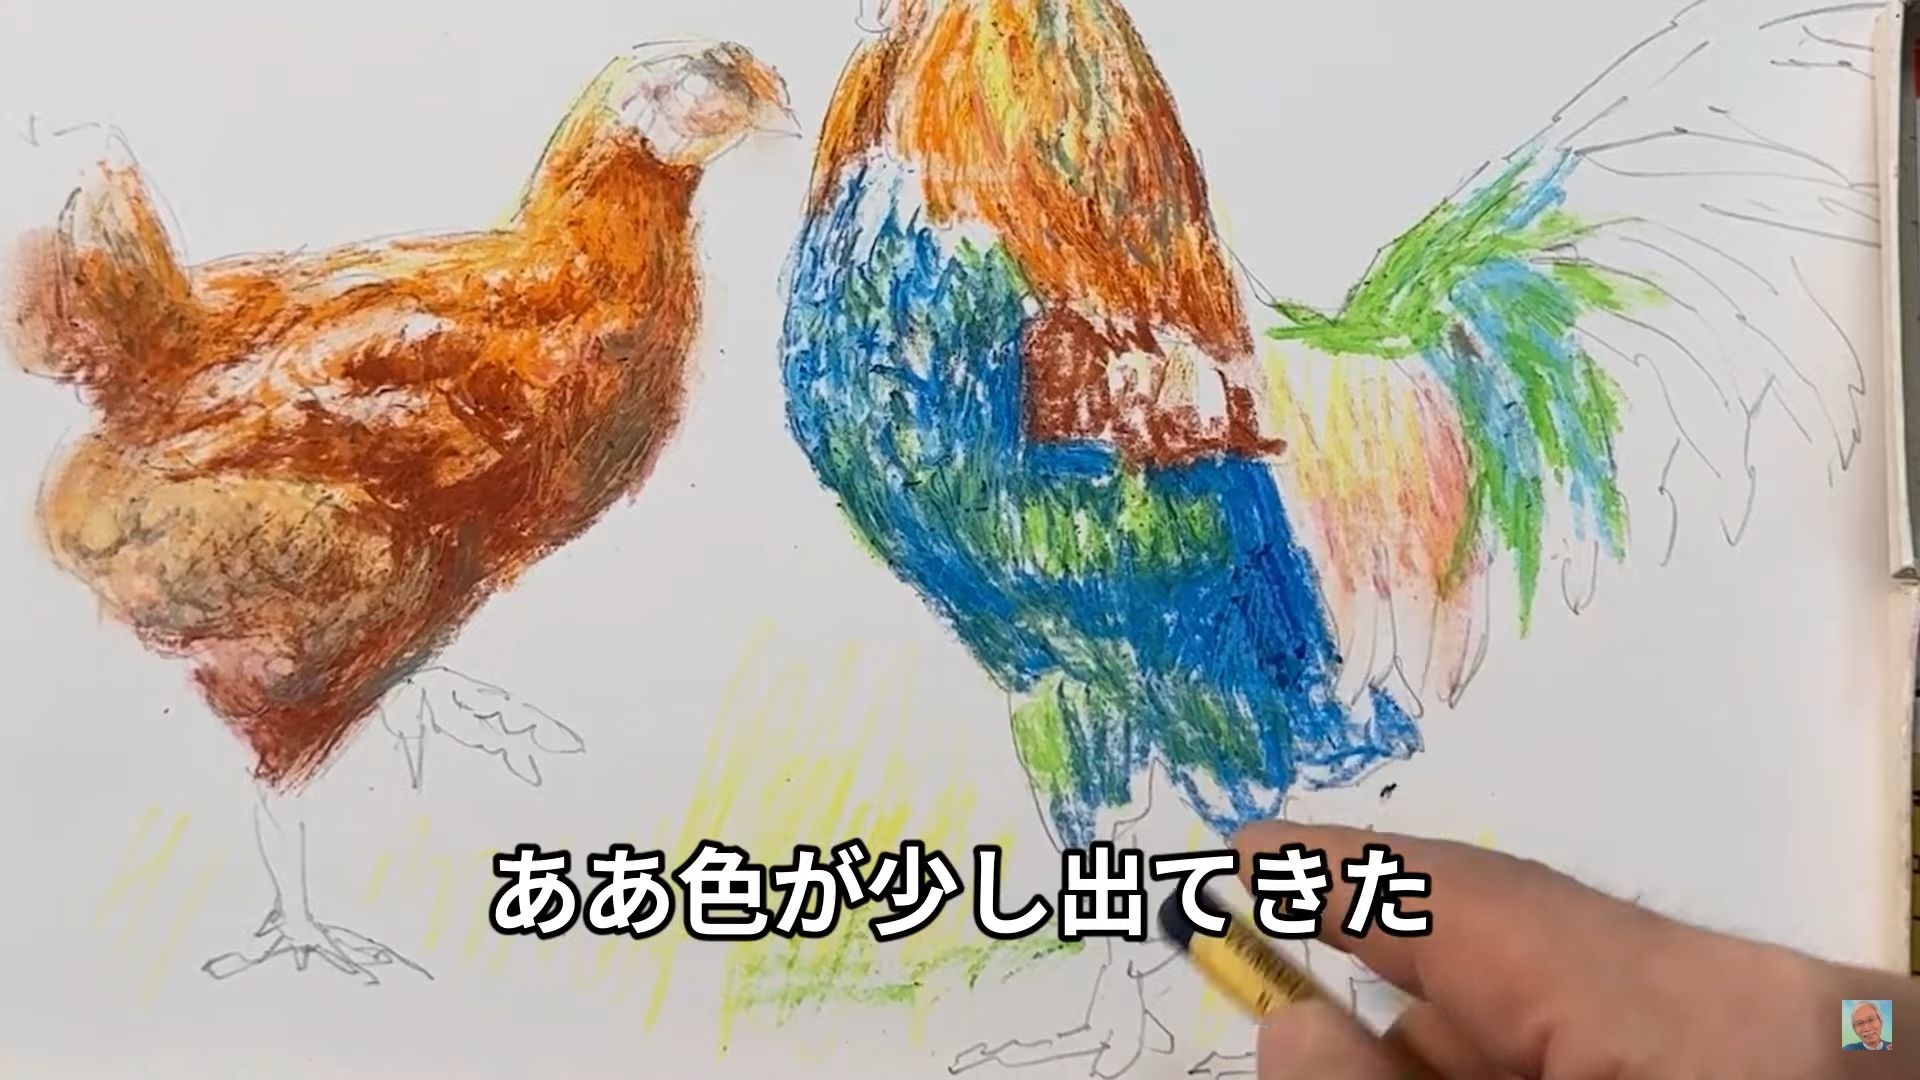 YouTube「Watercolor by Shibasaki 」より　色が出にくいところ